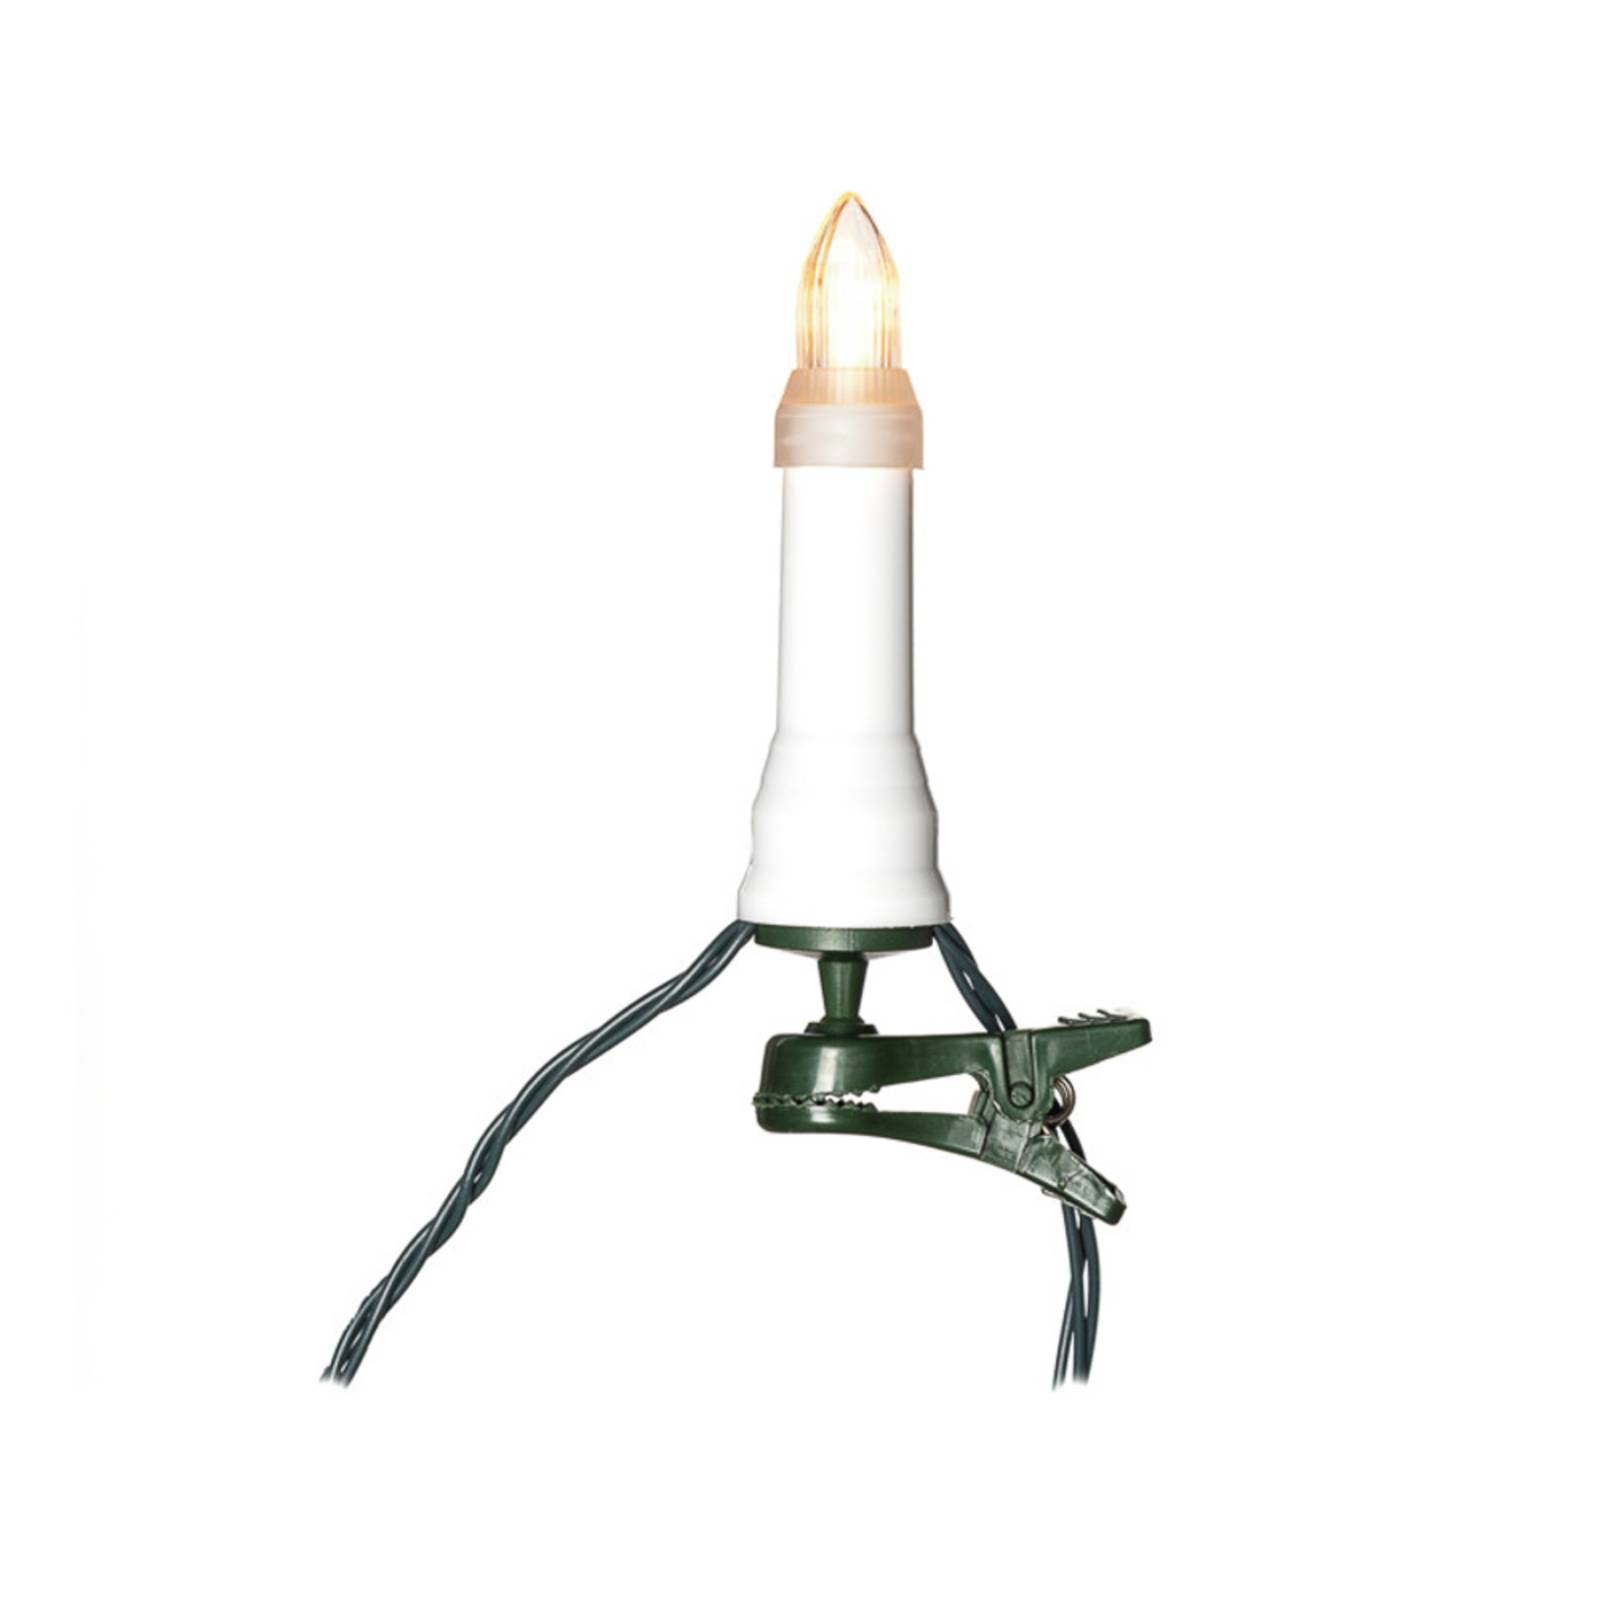 Konstsmide Christmas LED-Lichterkette Topbirnen IP44 amber 25-flammig